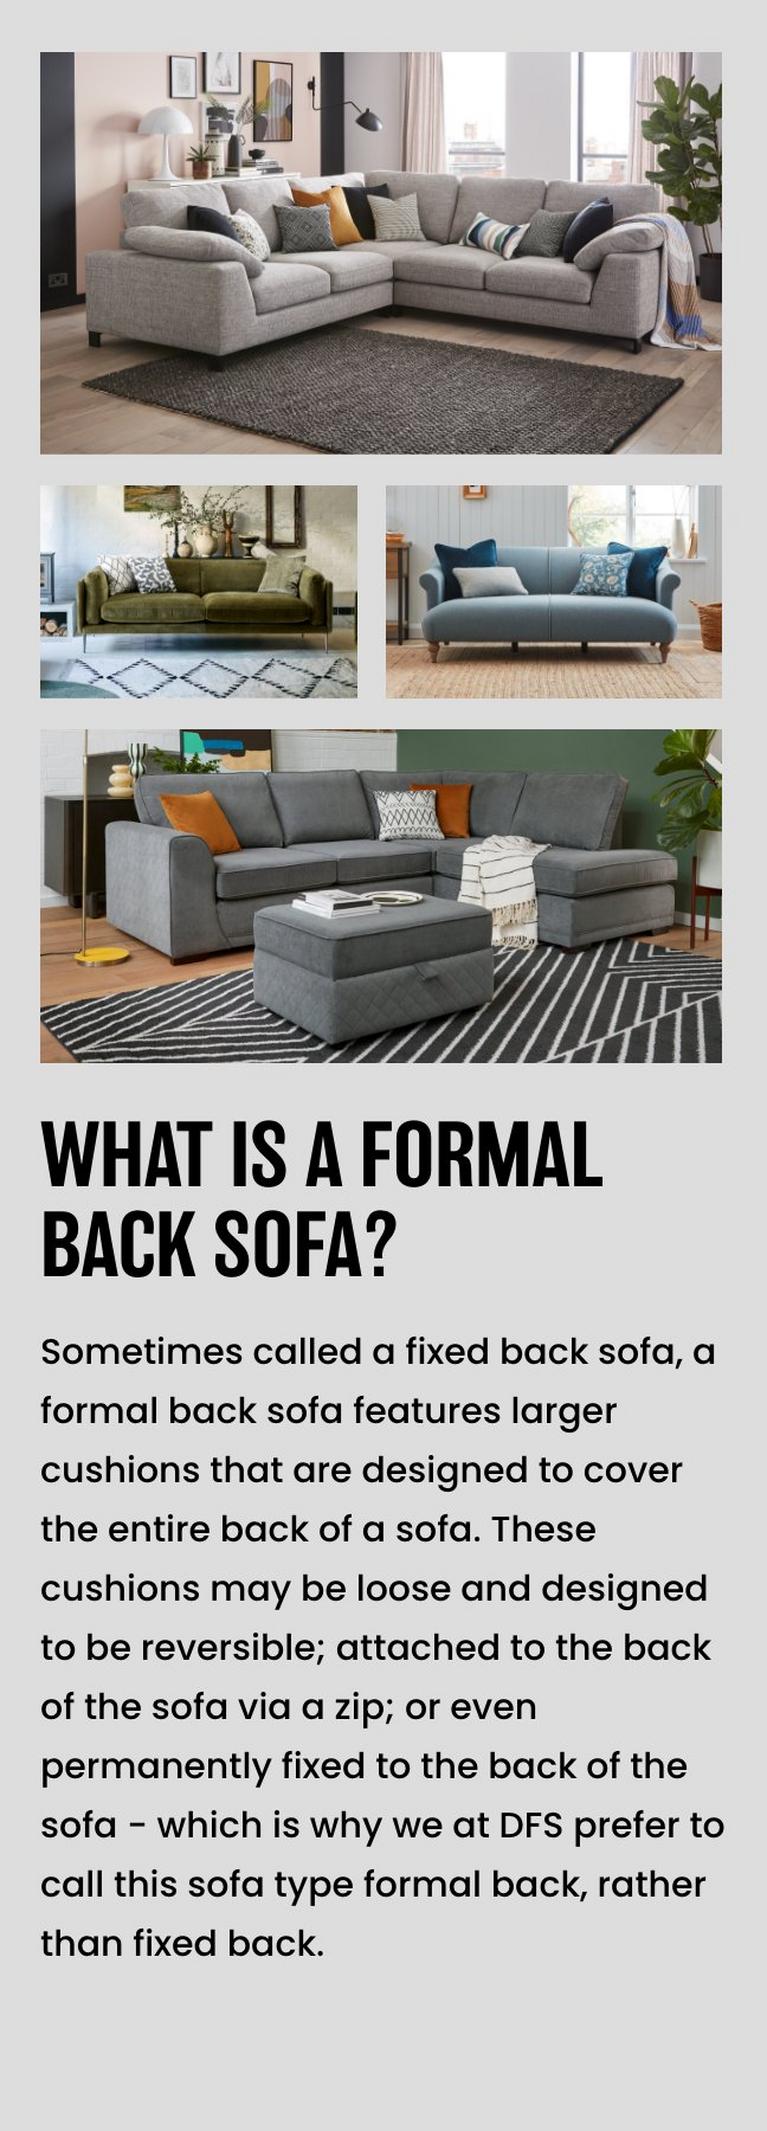 Formal Back Sofas